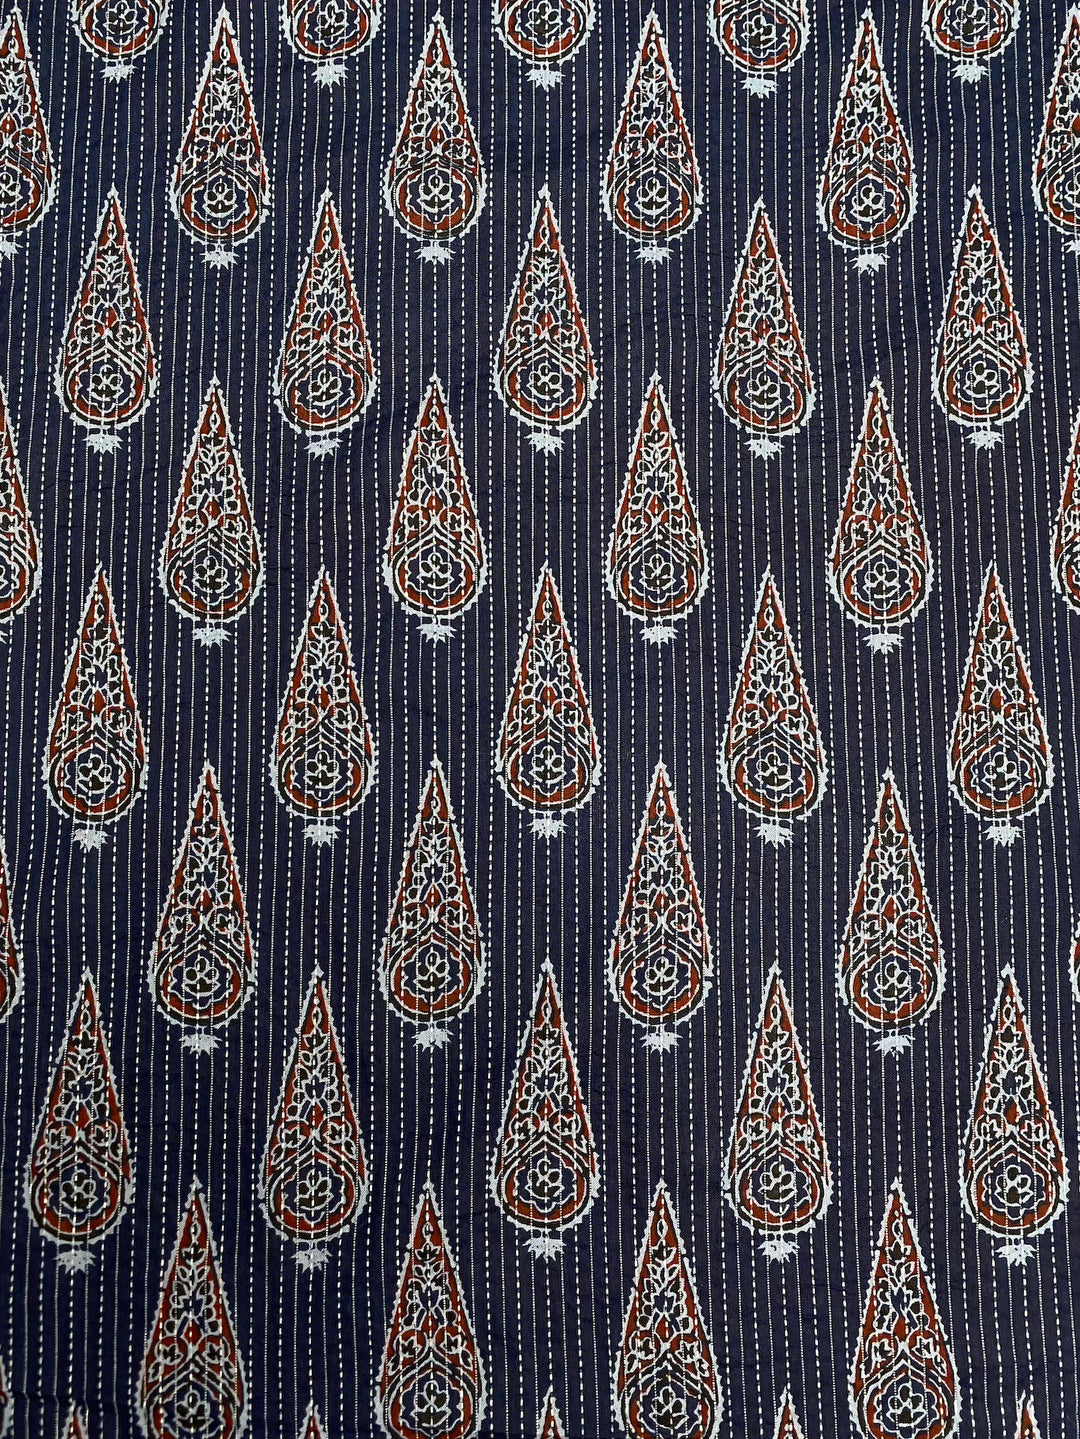 Block Printed Kantha Stitch Cotton Fabric Navy Blue